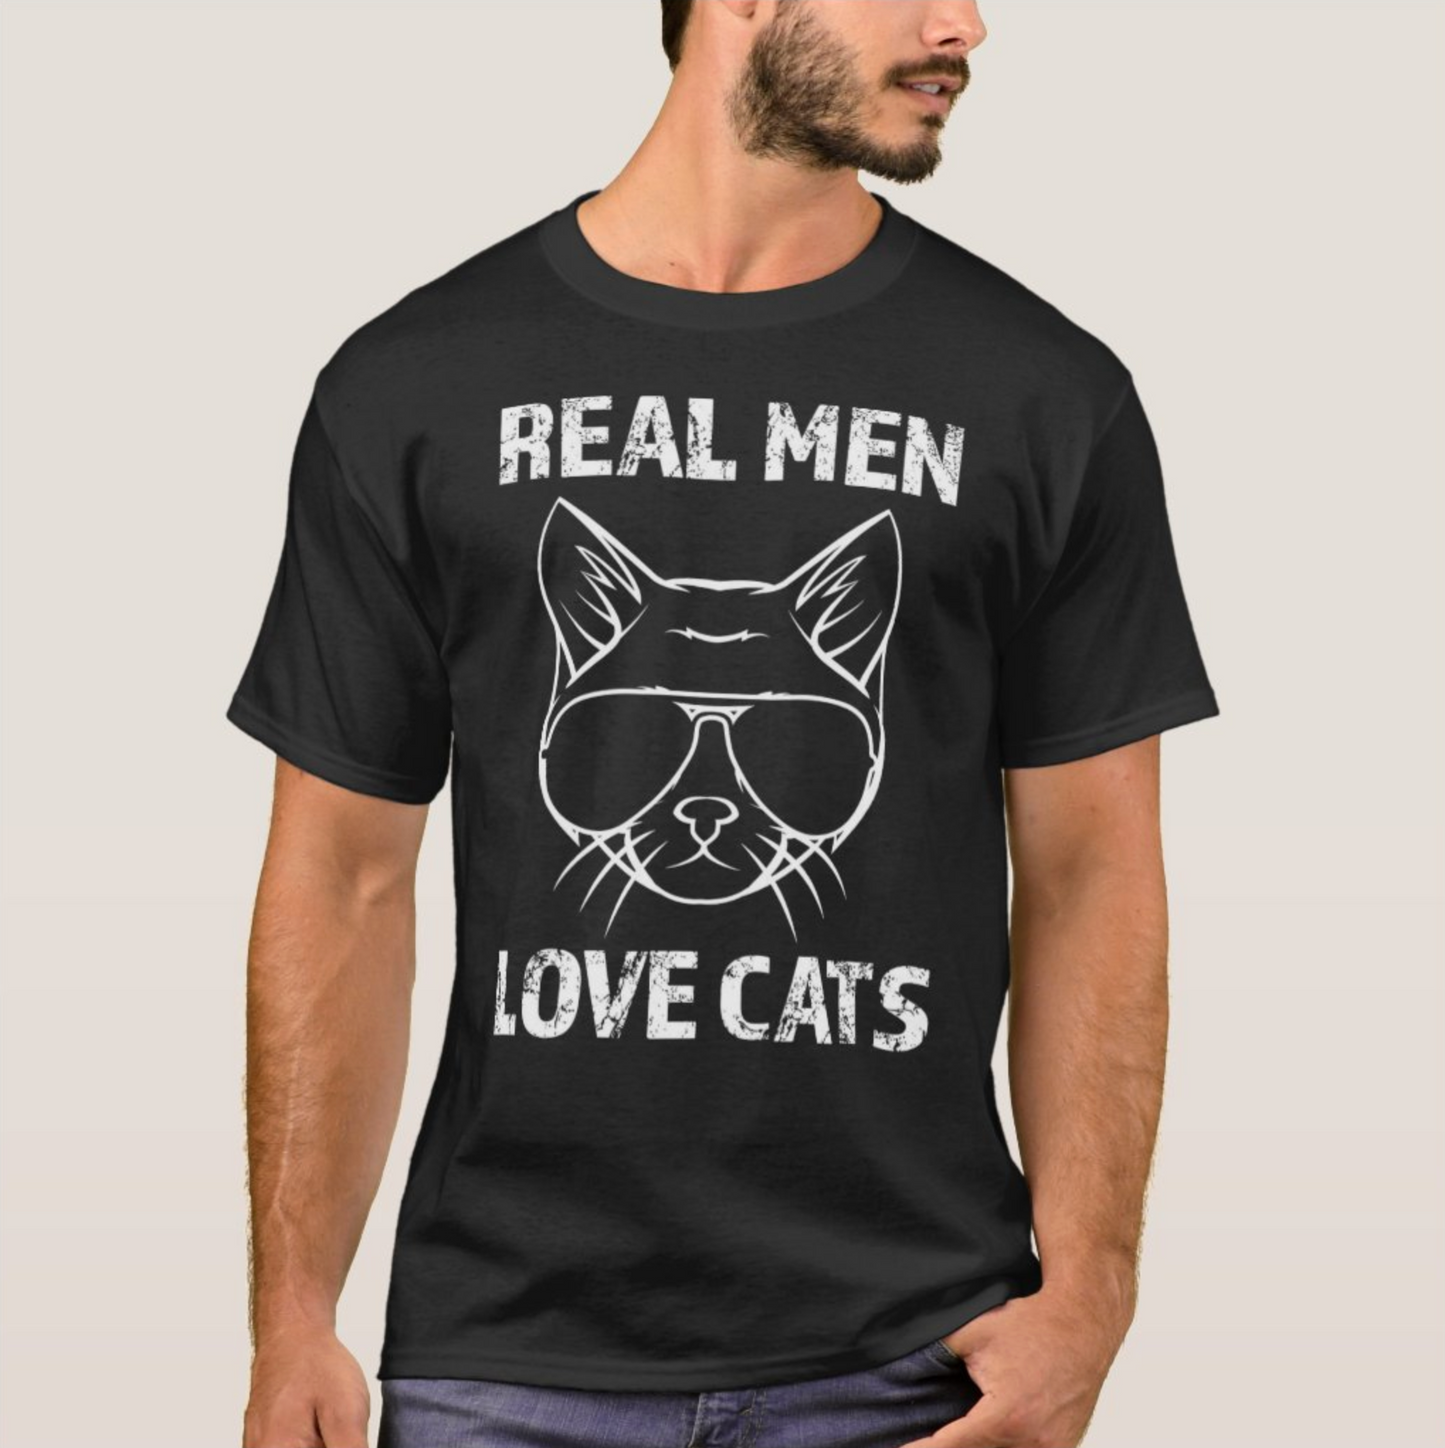 Real men love cats t- shirt